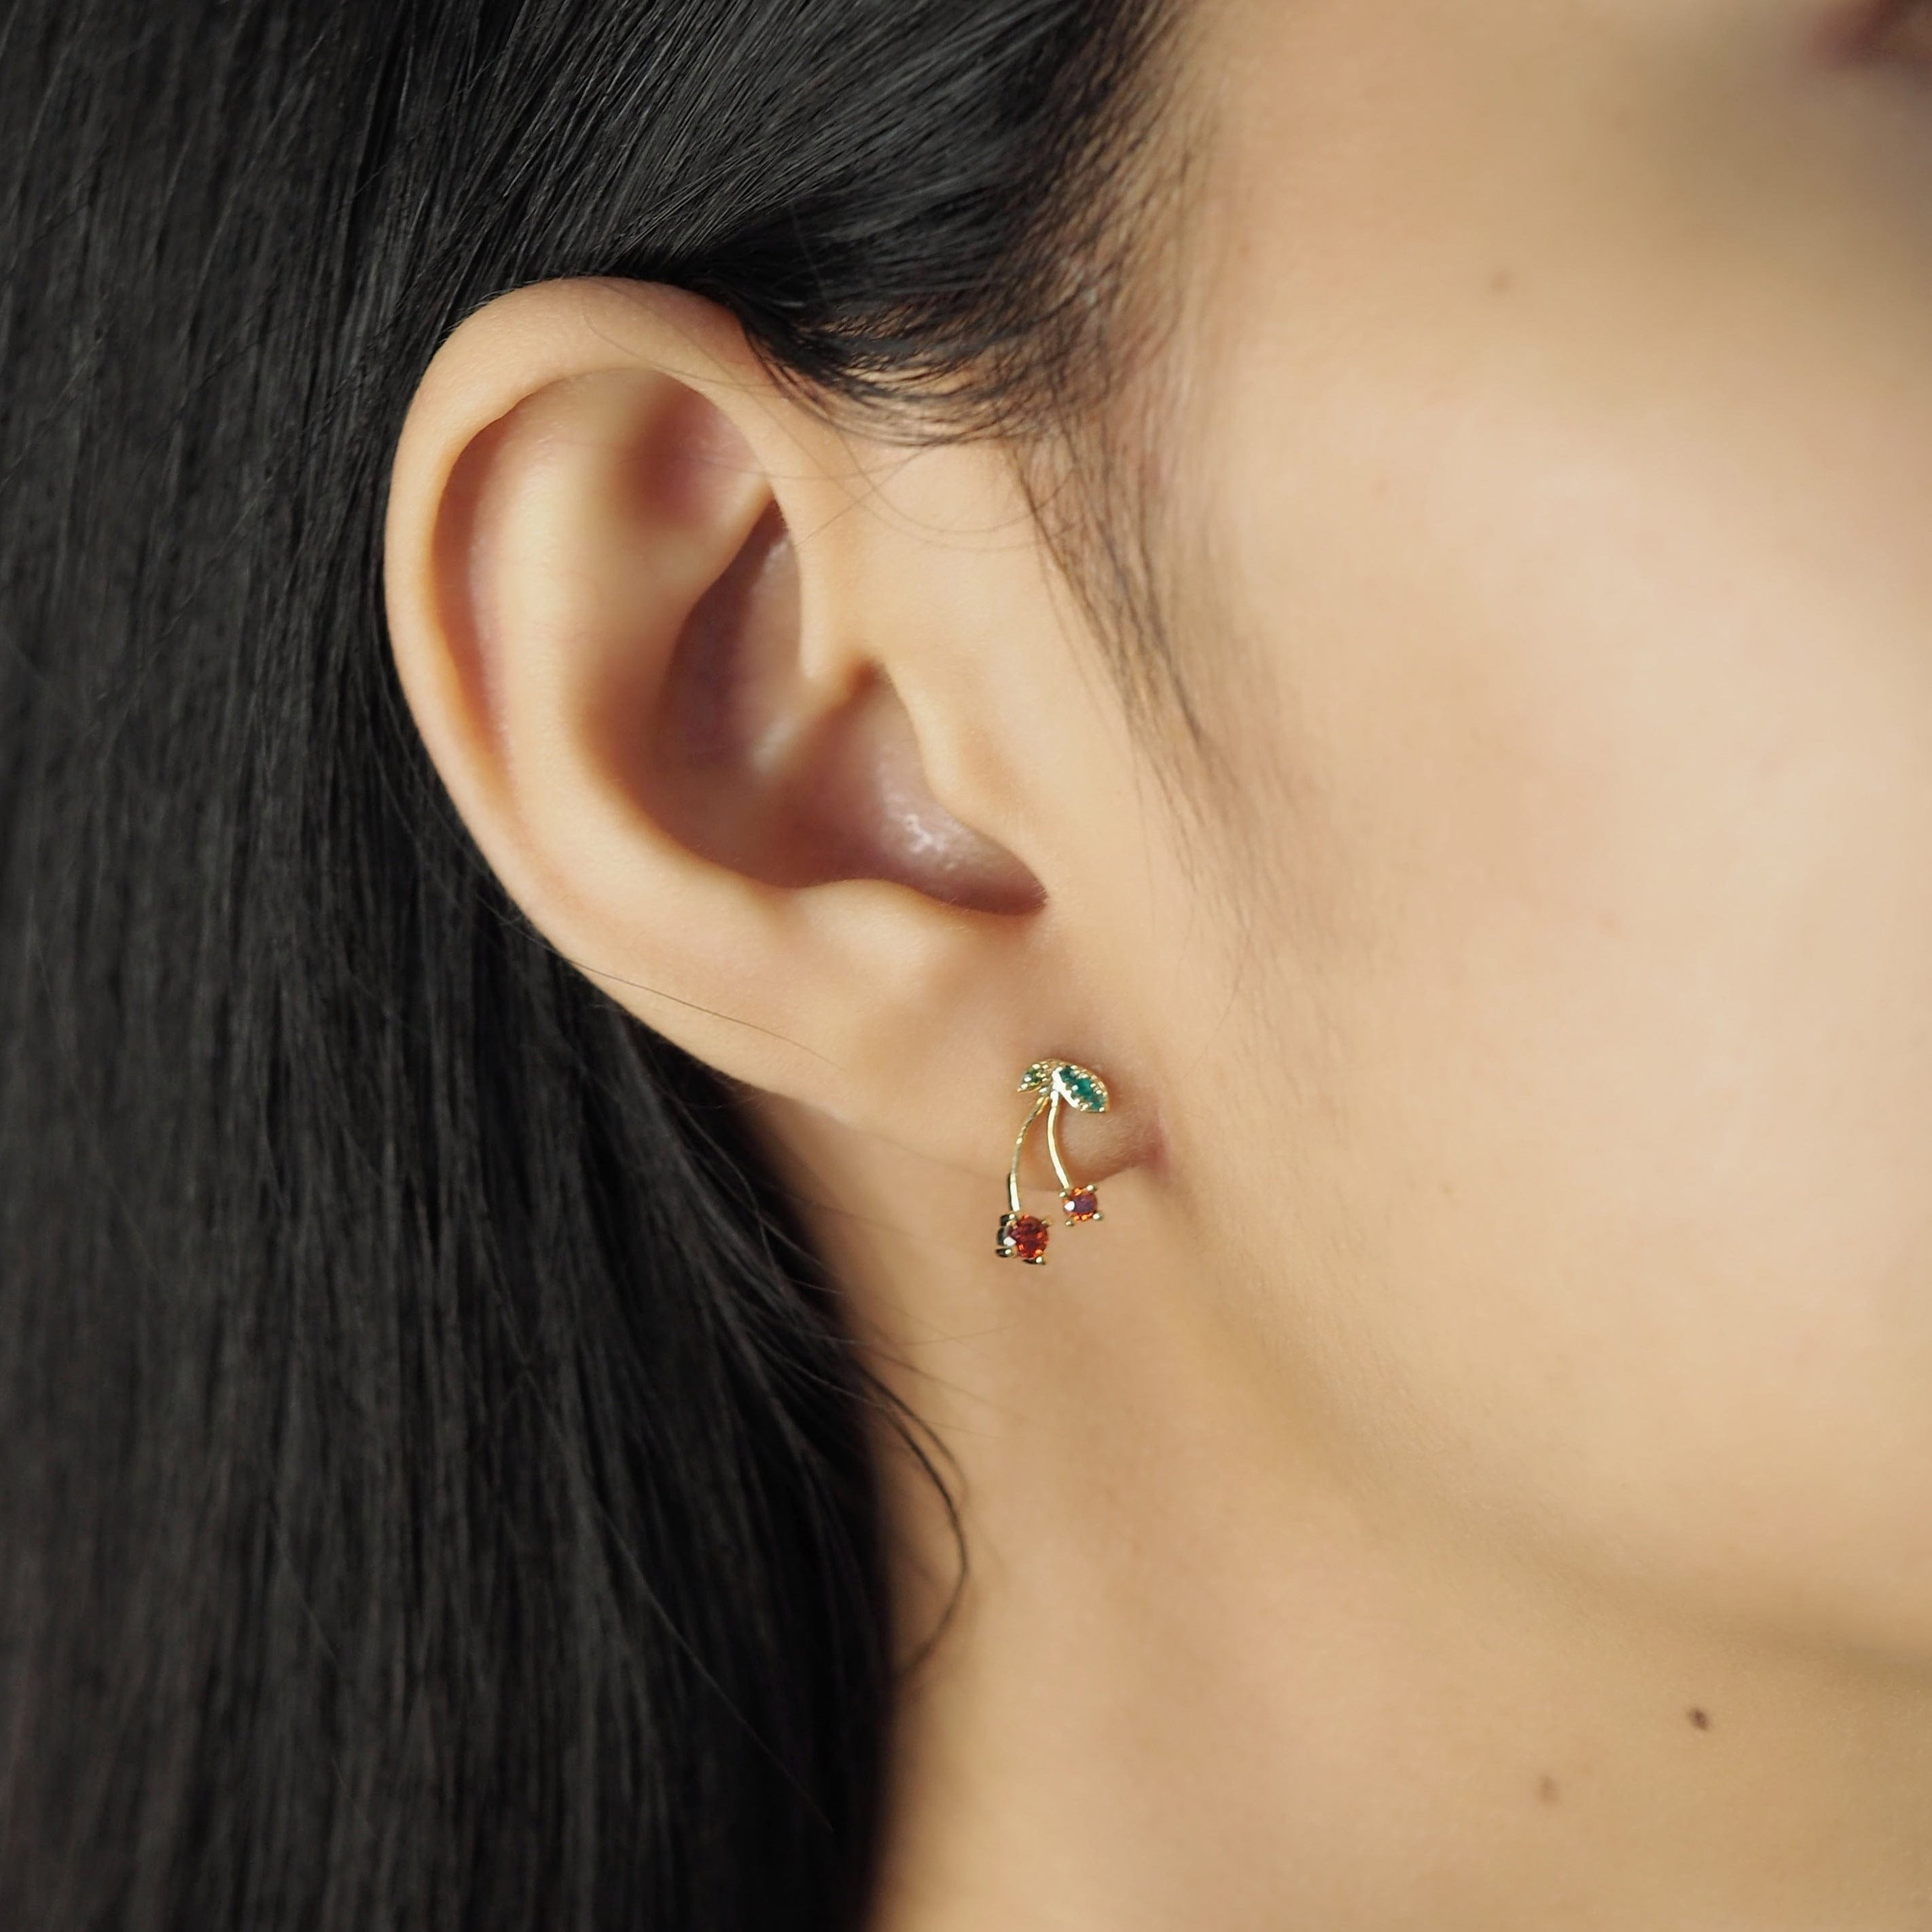 TAI JEWELRY Earrings Cherry Twist Studs